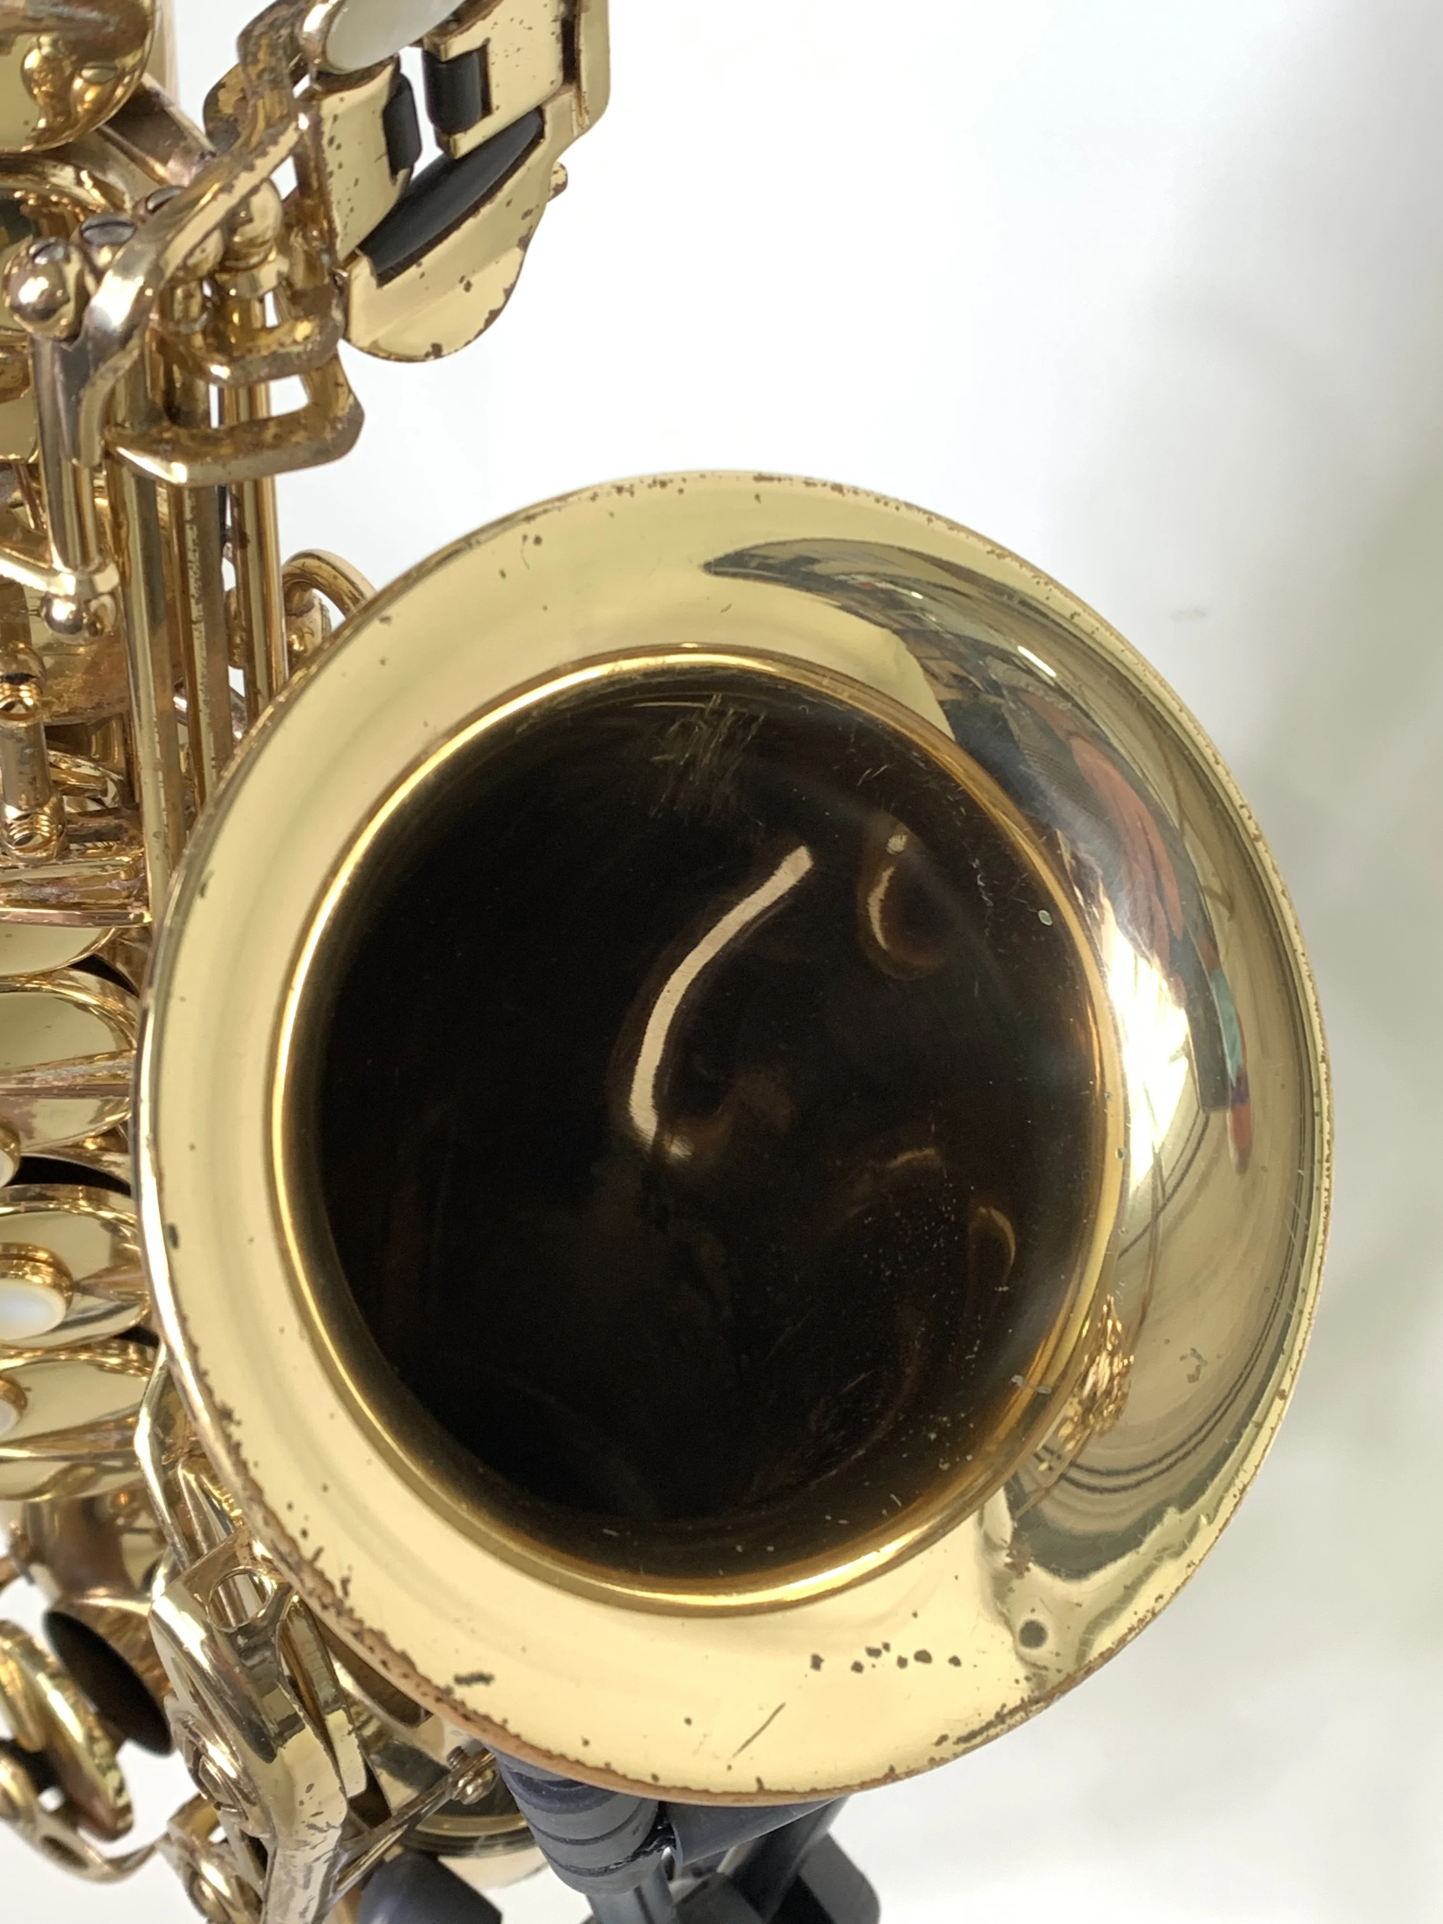 Mark VI alto saxophone - 230052